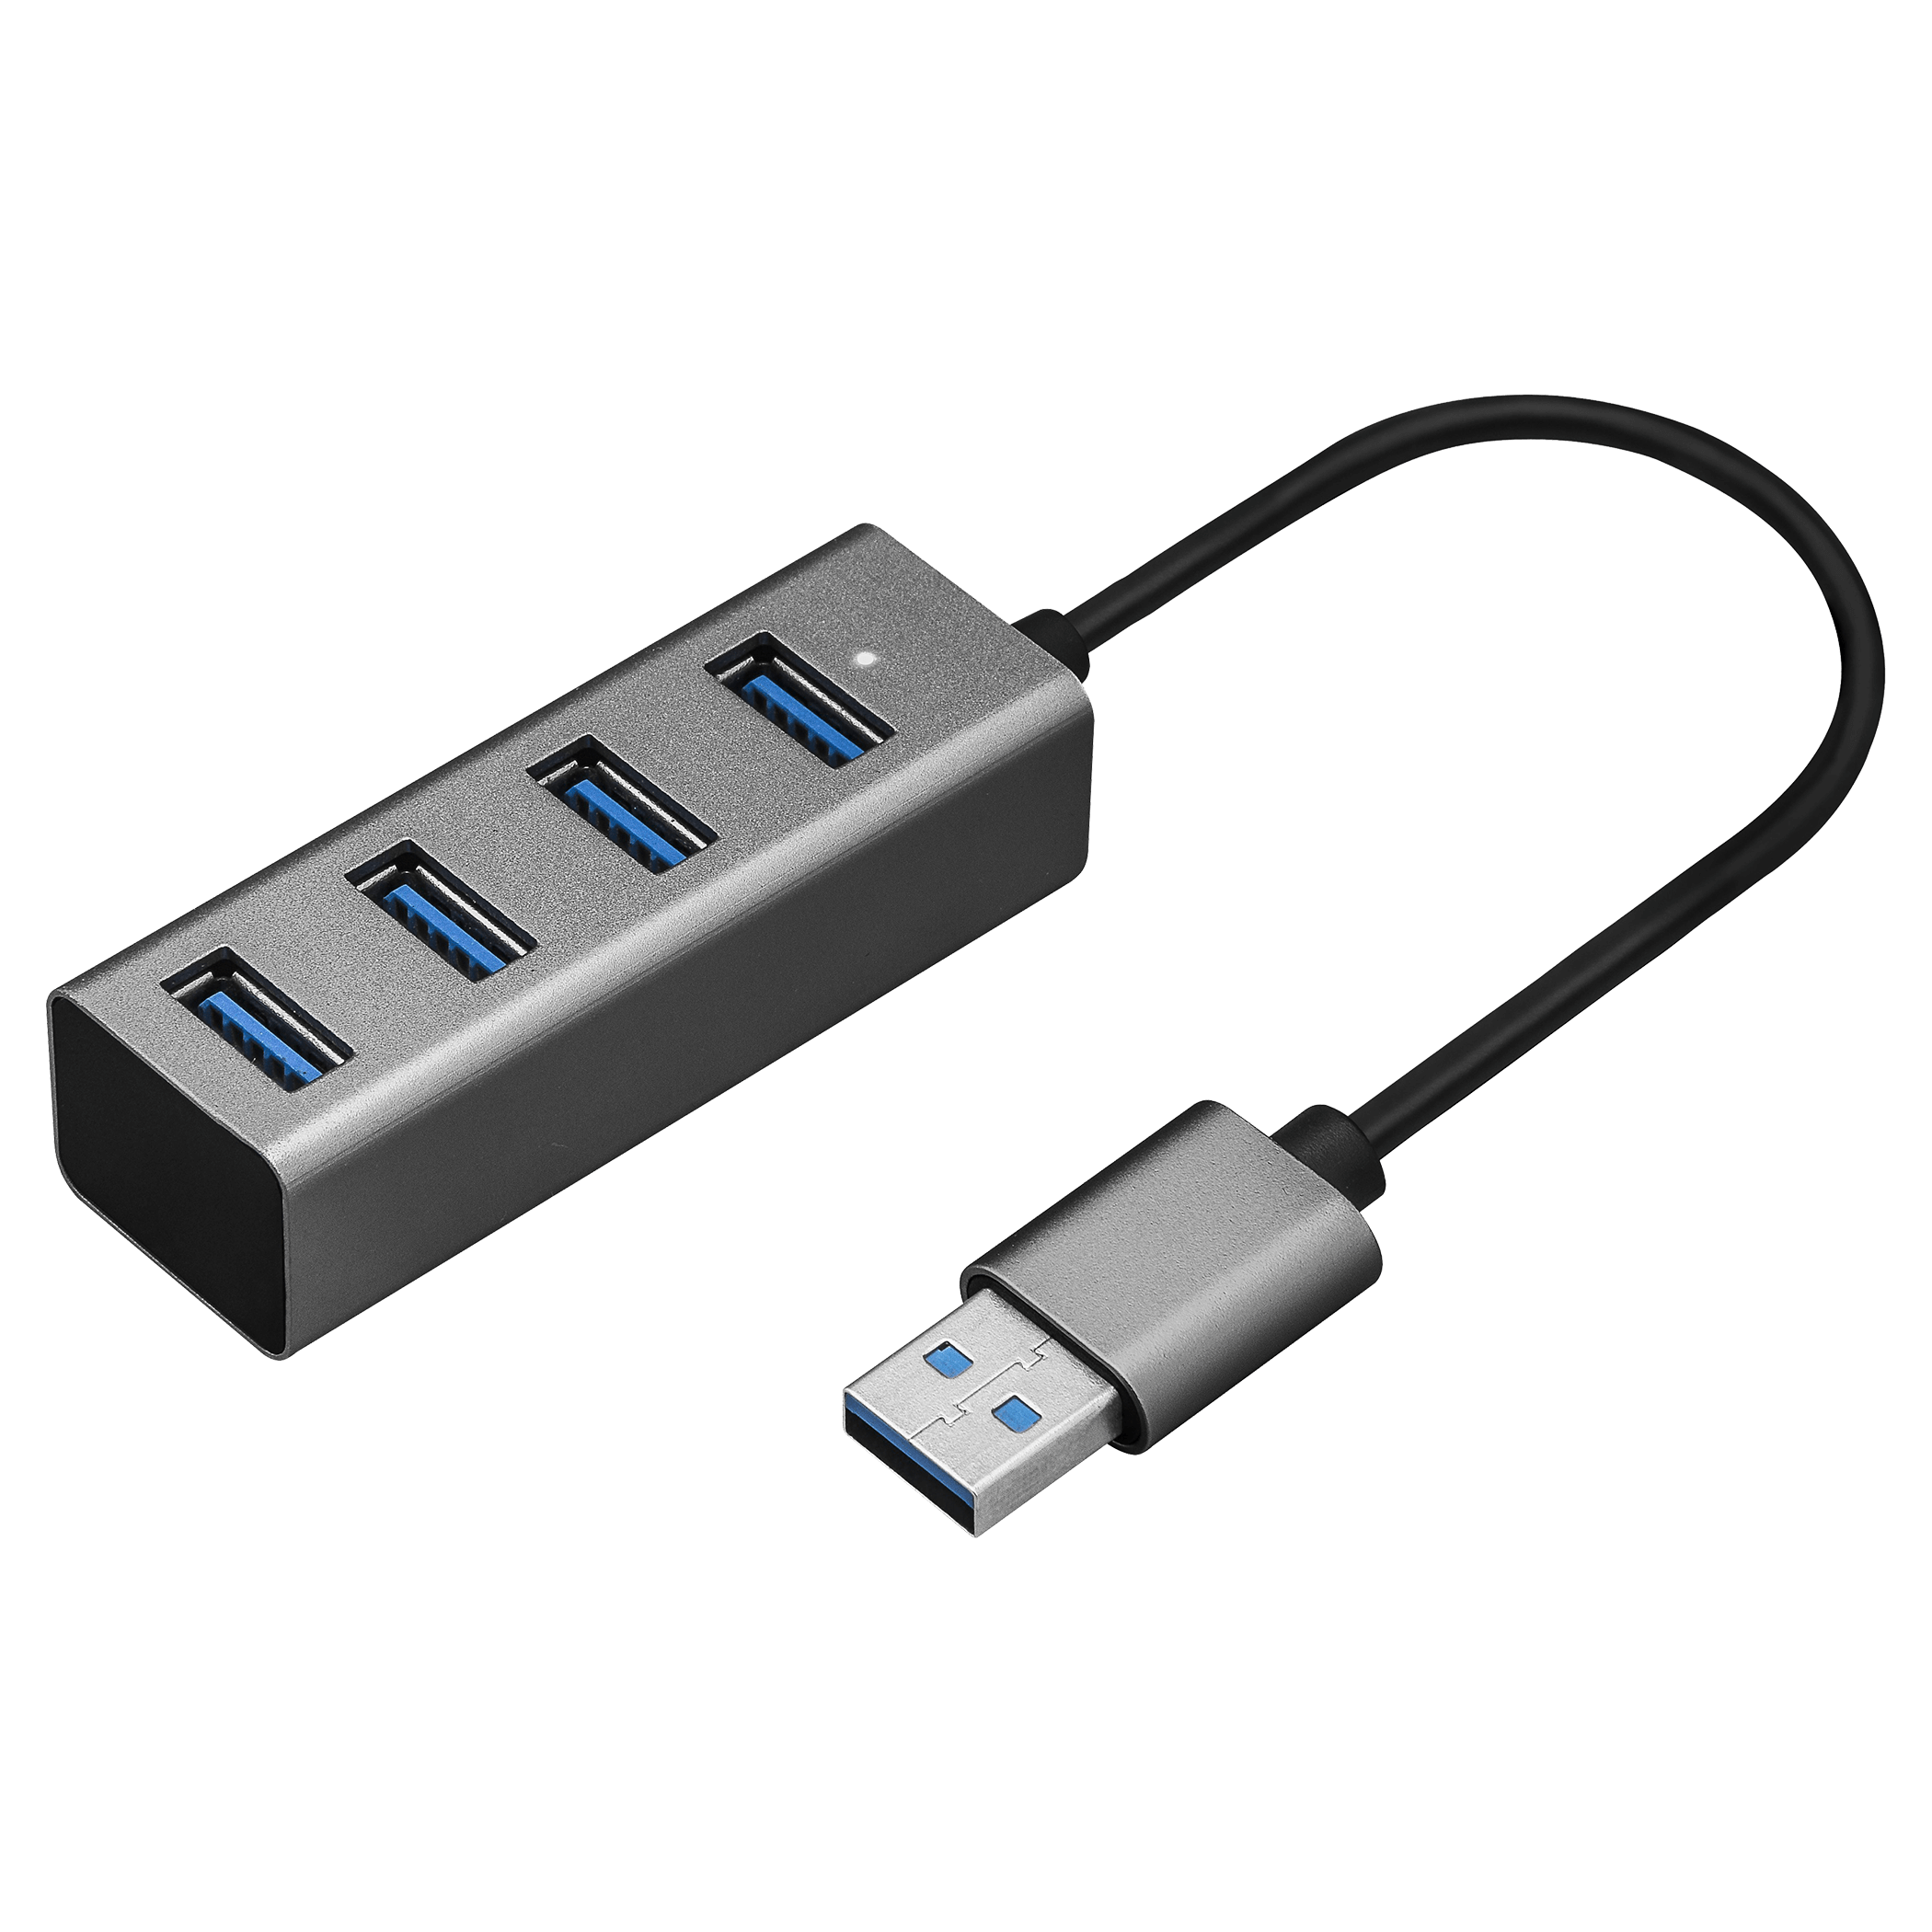 HUBERT Hliníkový USB rozbočovač se 4 porty, černý